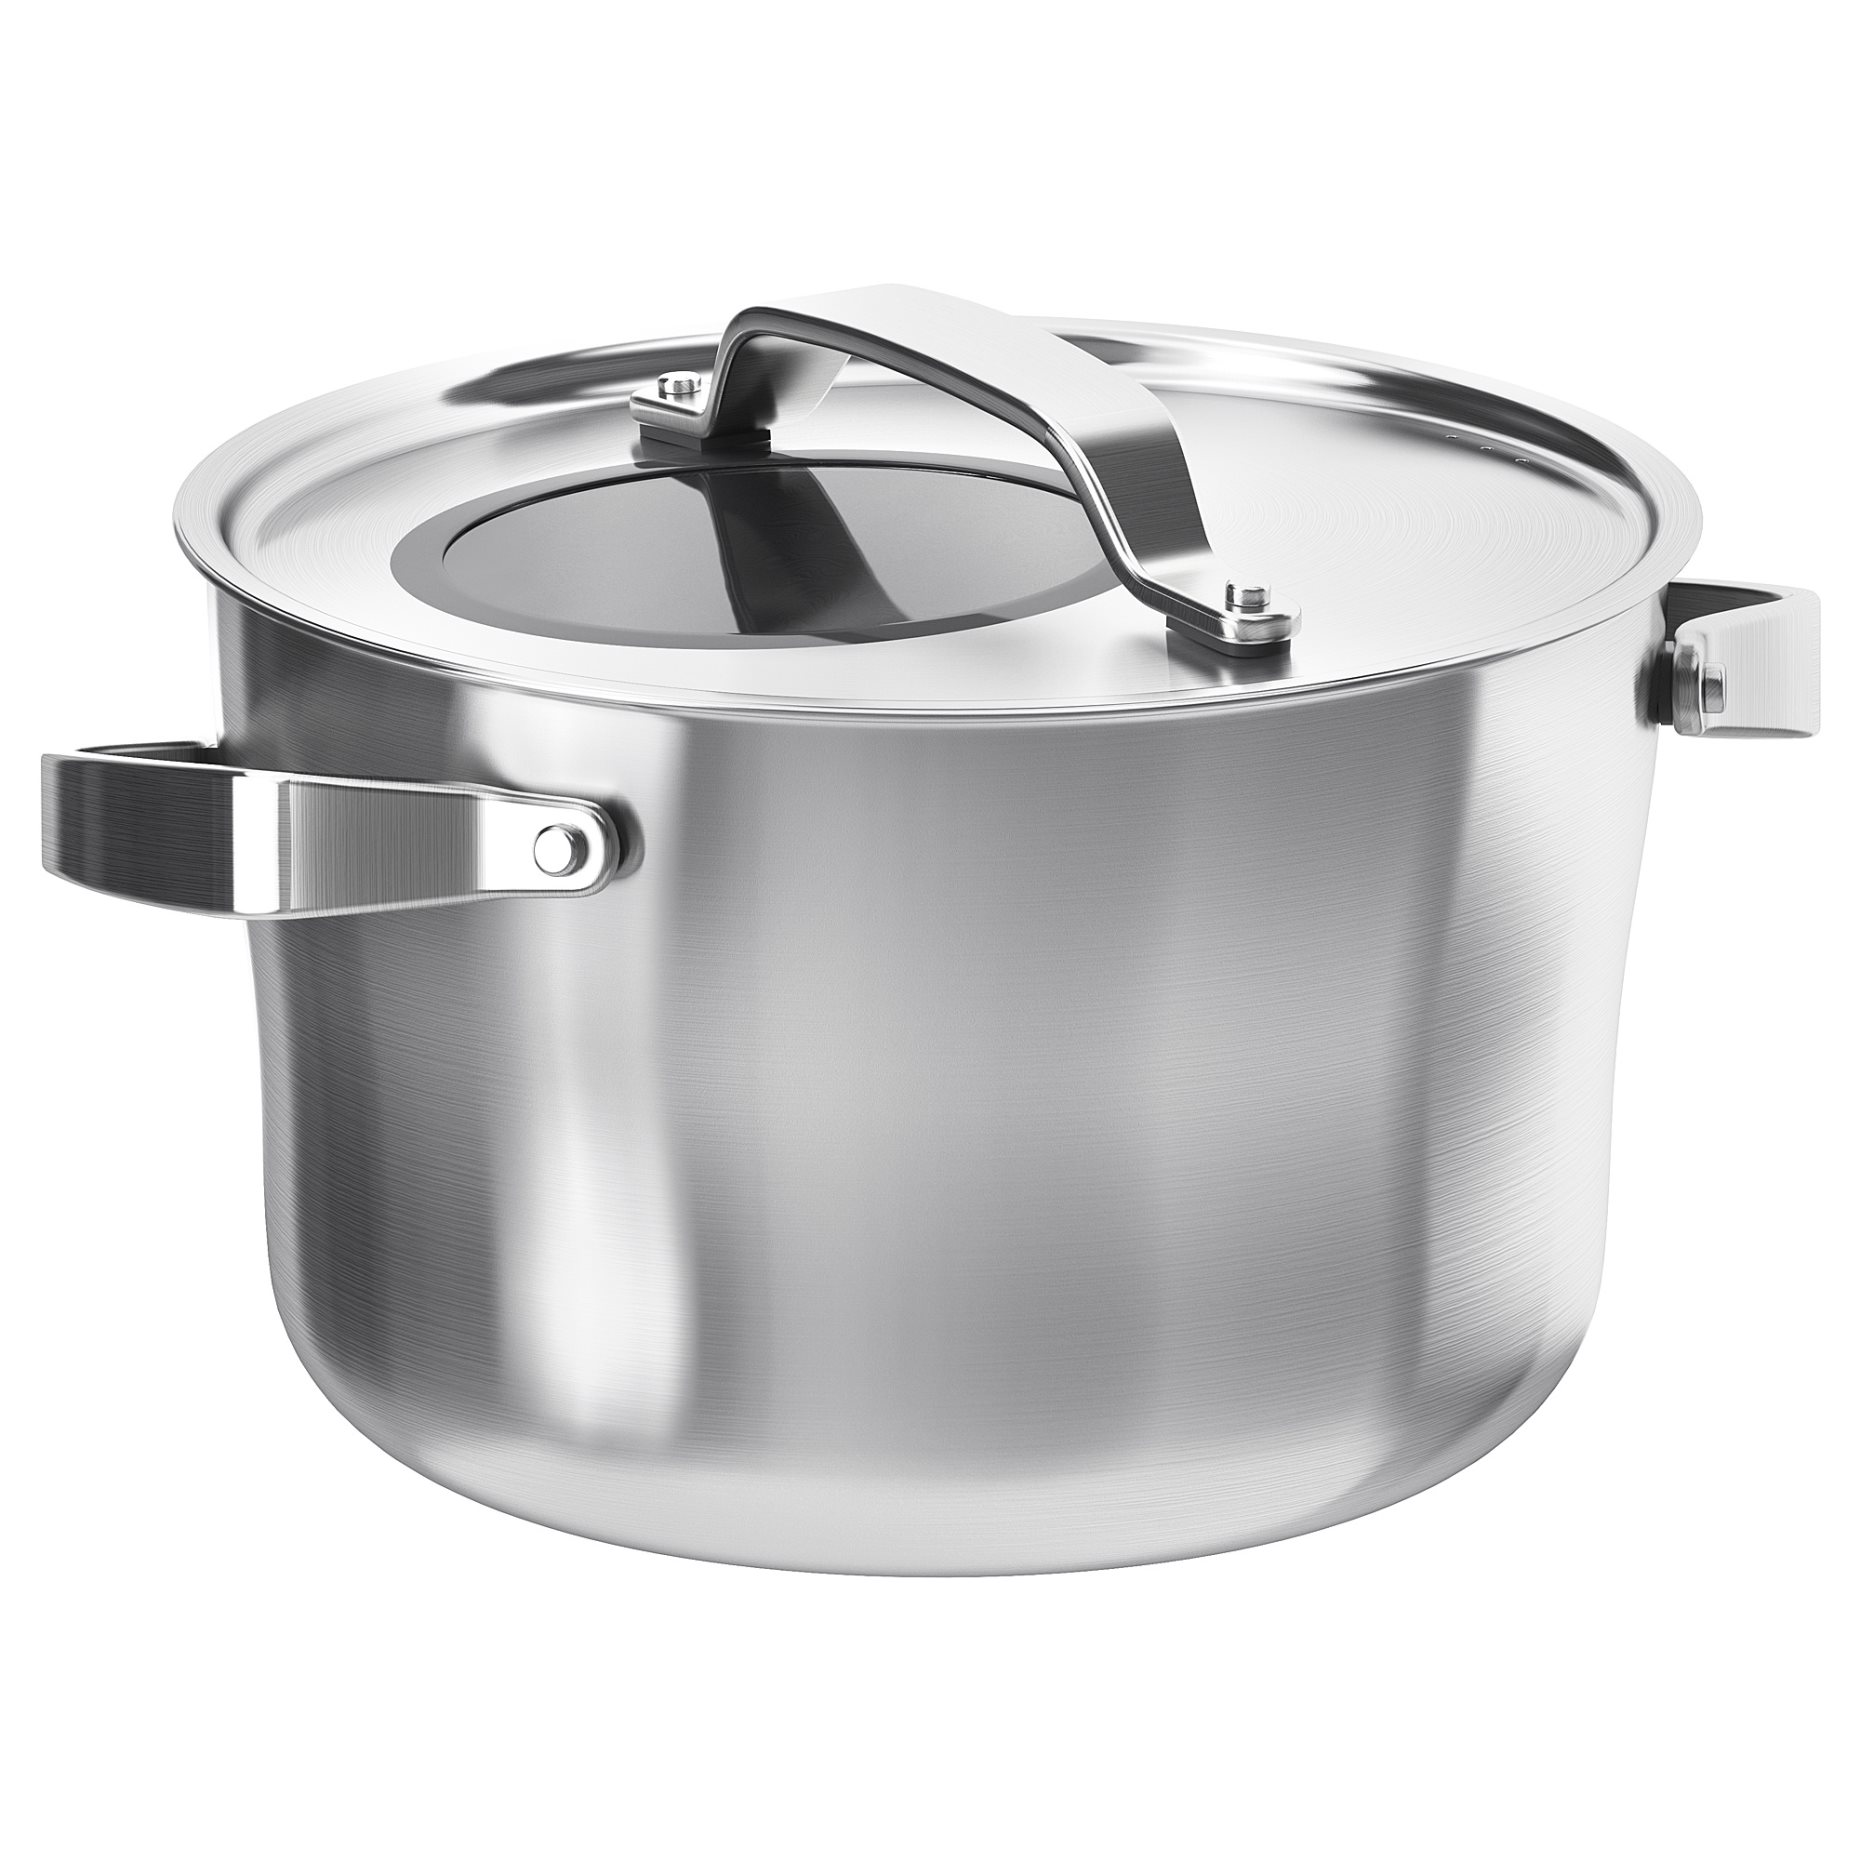 SENSUELL, pot with lid, 5.5 l, 903.245.47